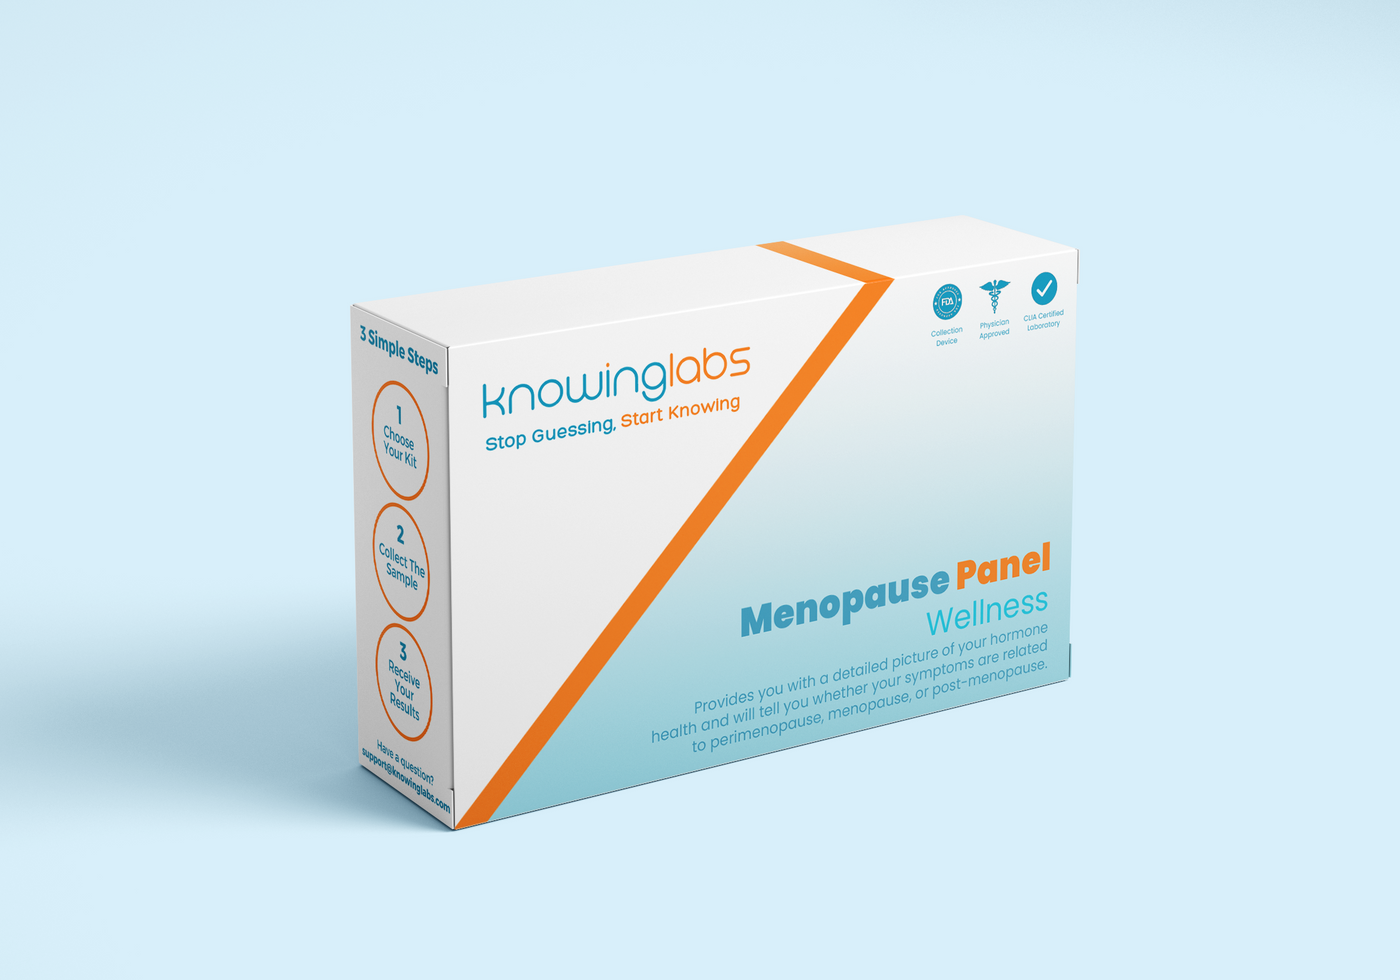 Menopause Panel